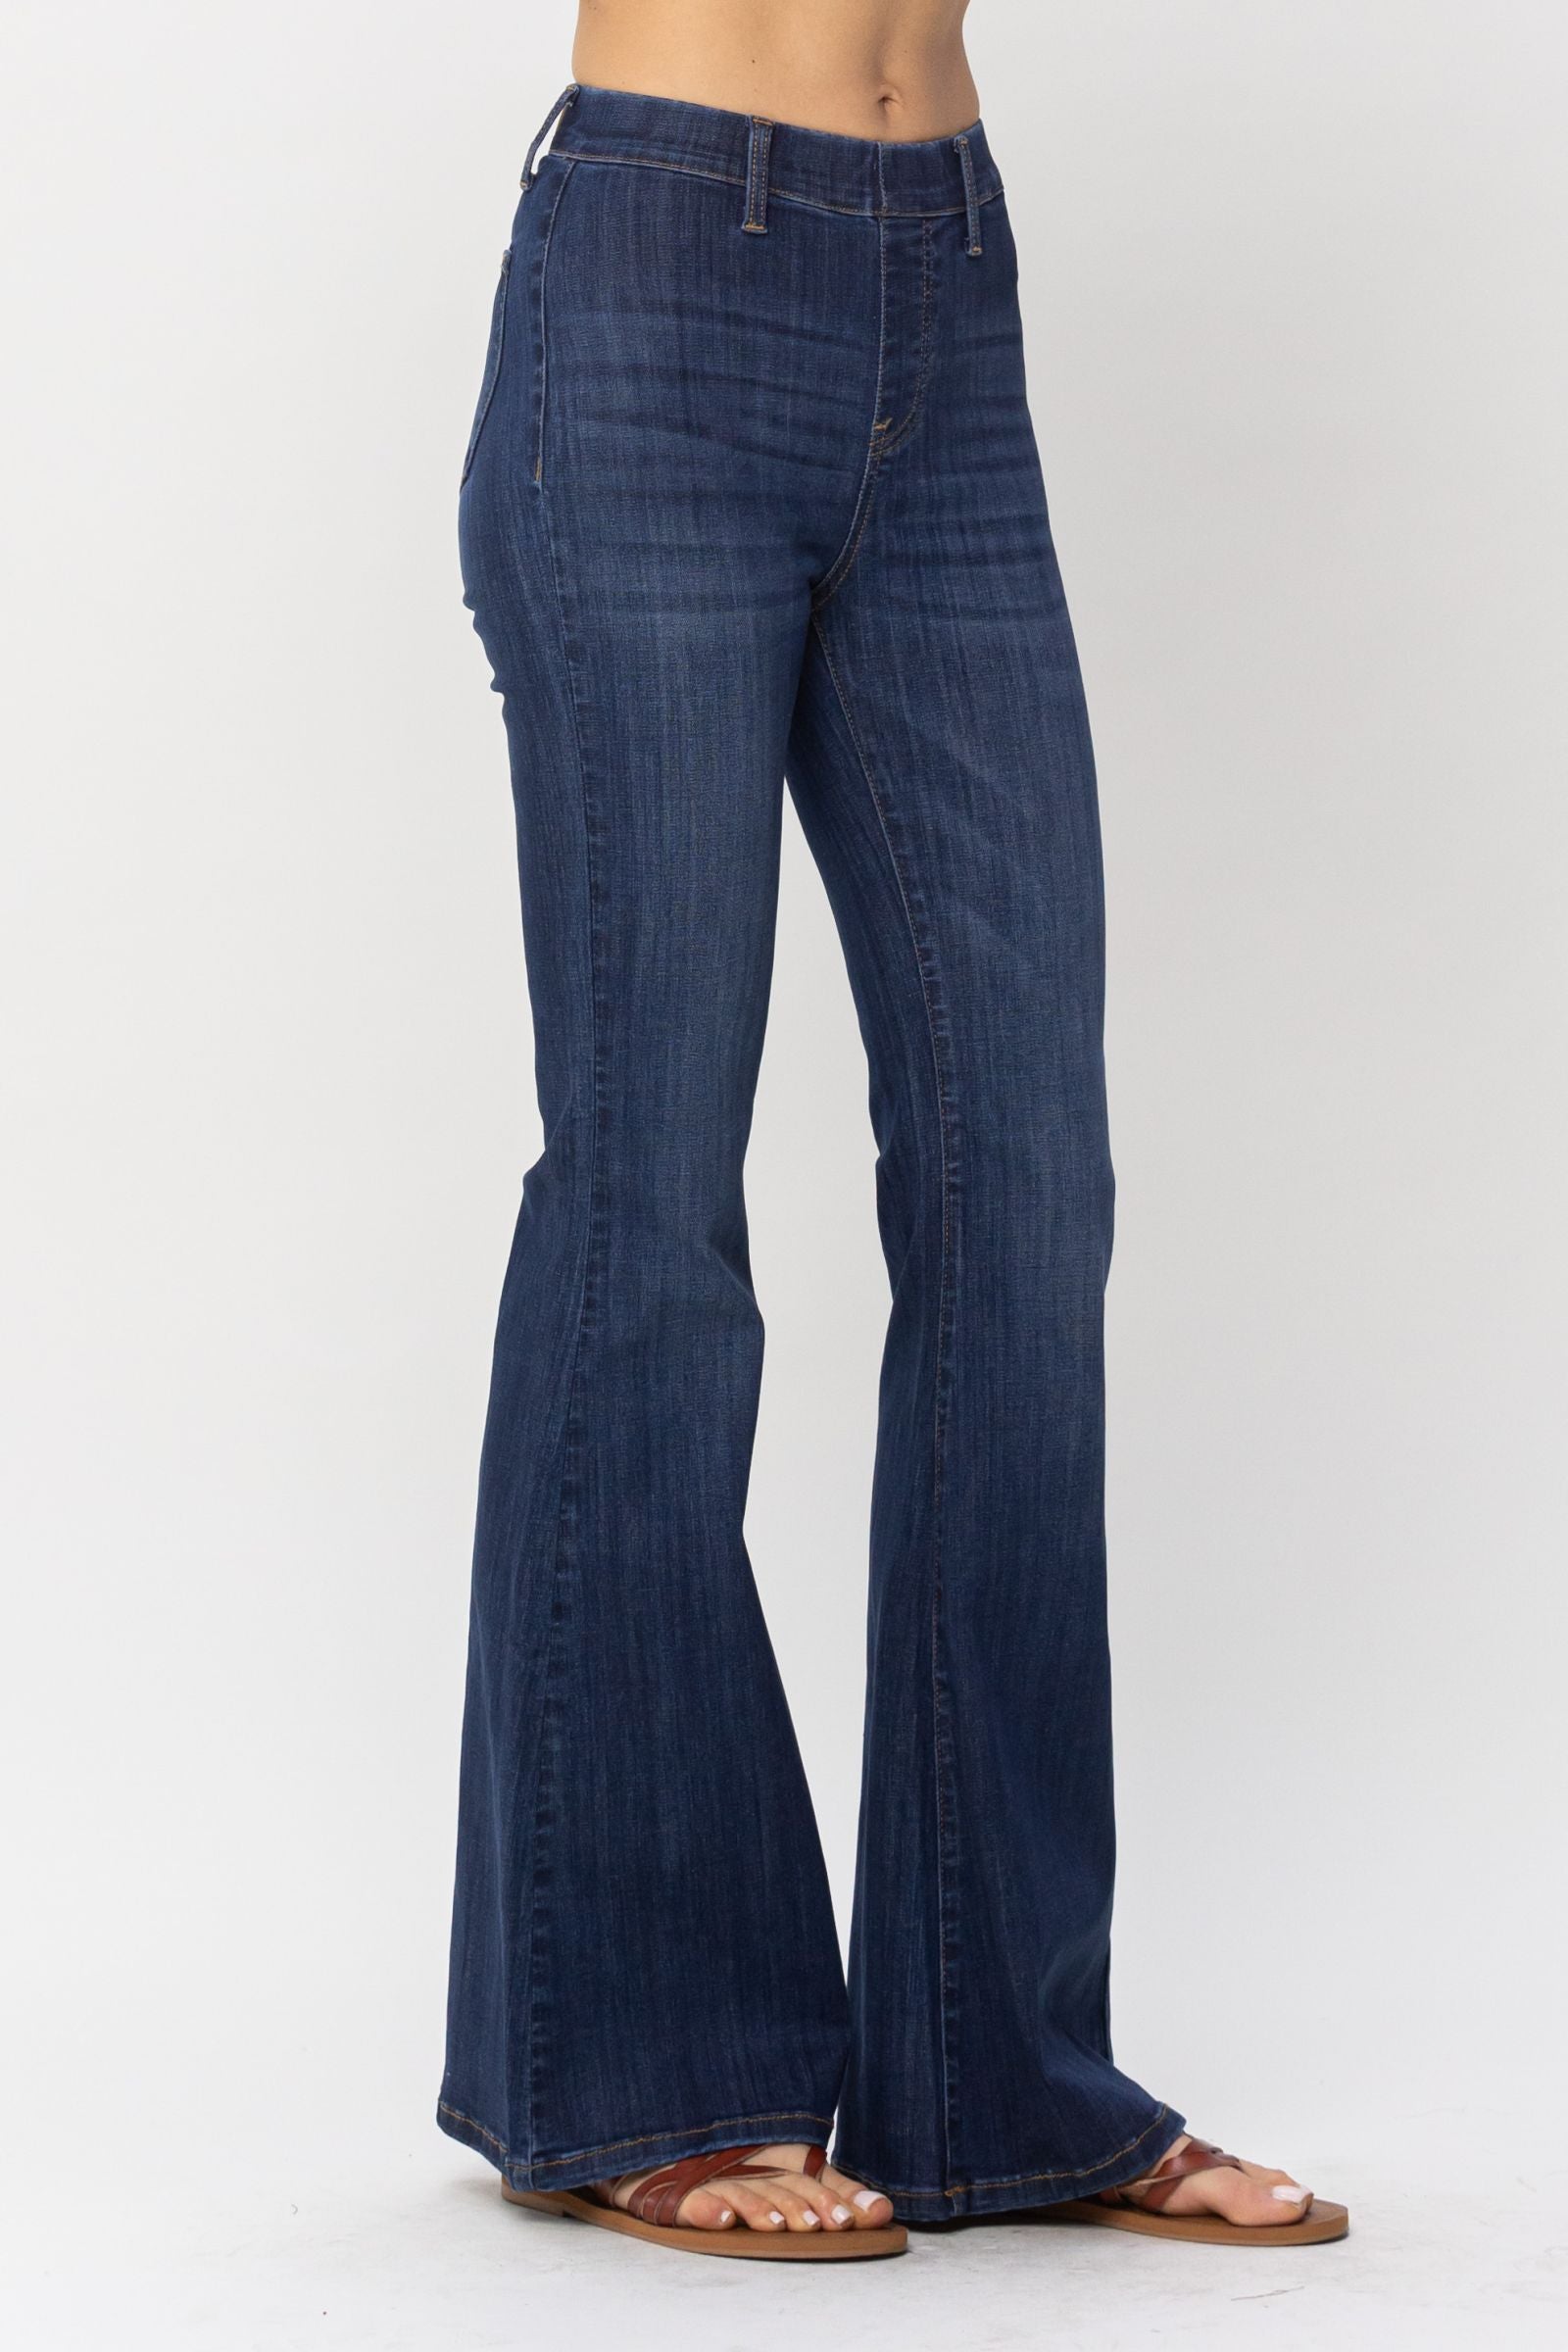 KanCan High Rise Super Flare Jeans - Mills Mercantile